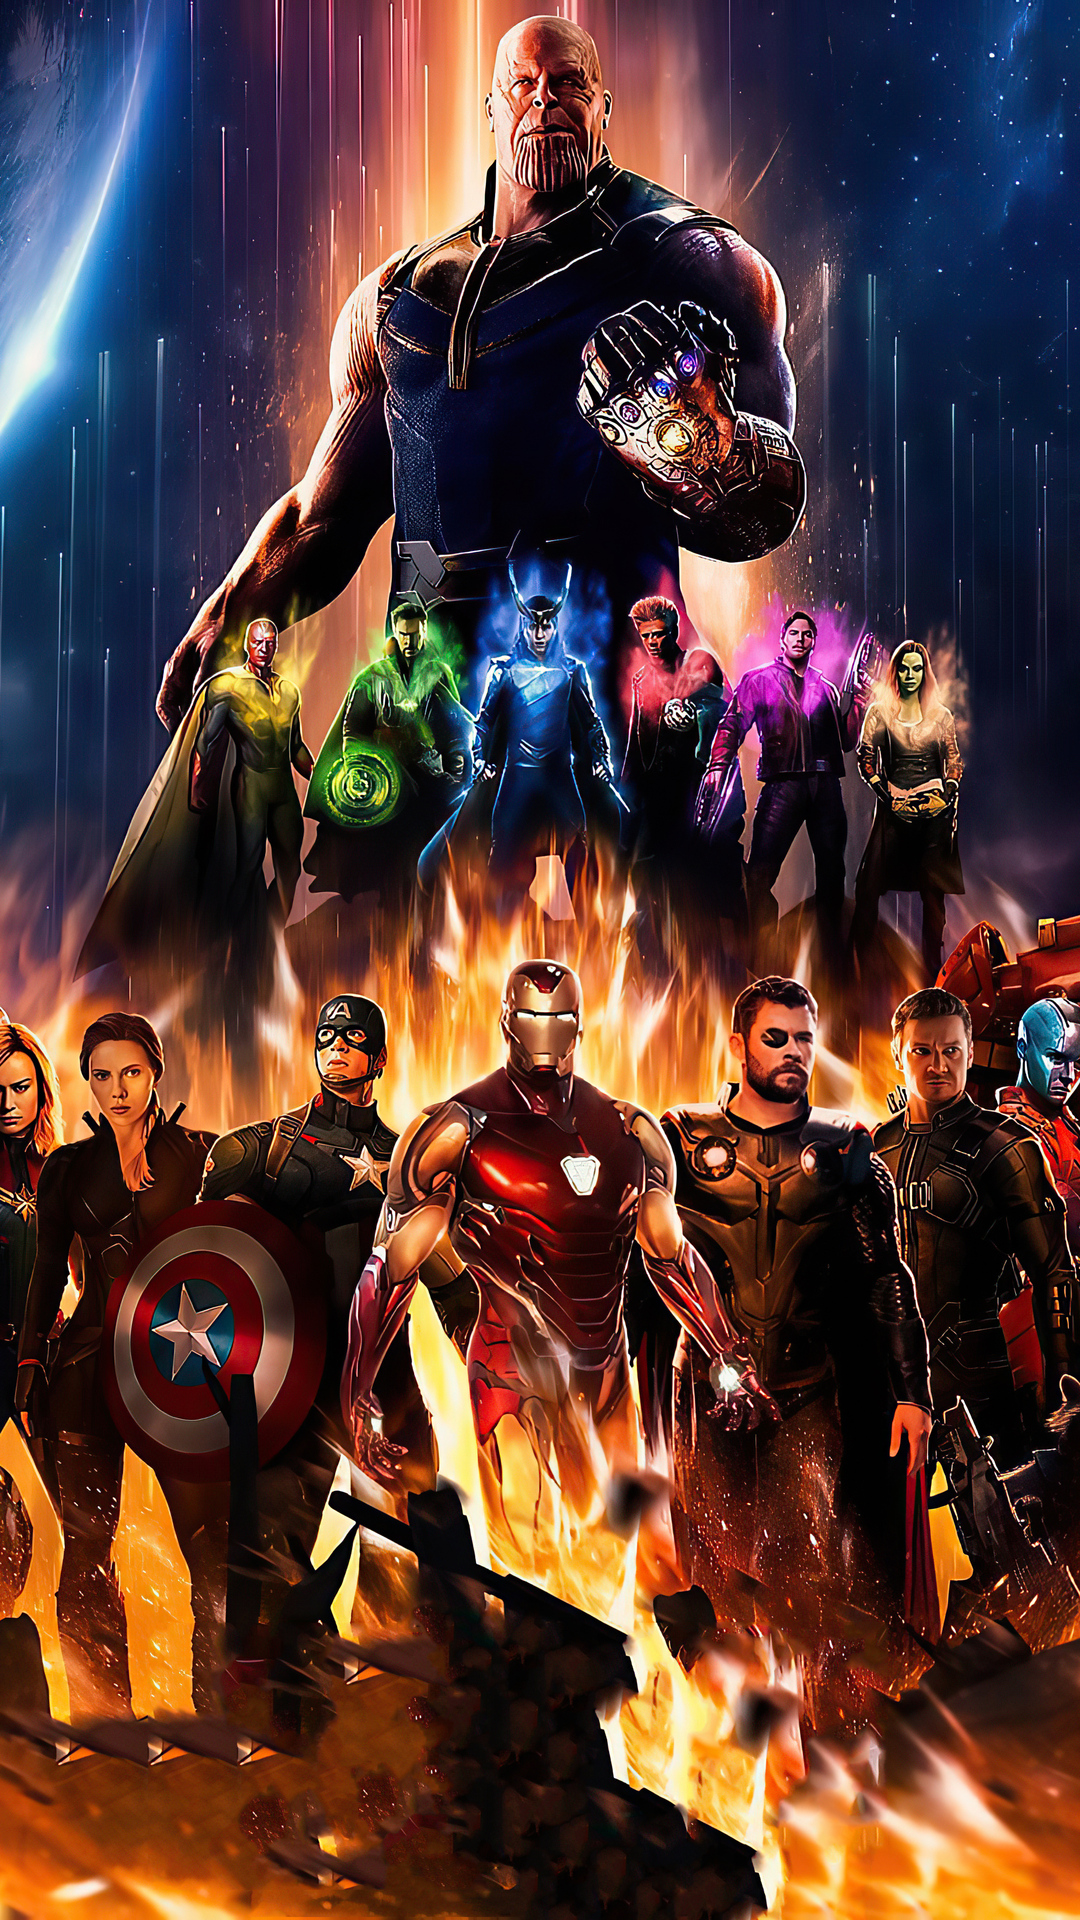 Avengers: Endgame download the new